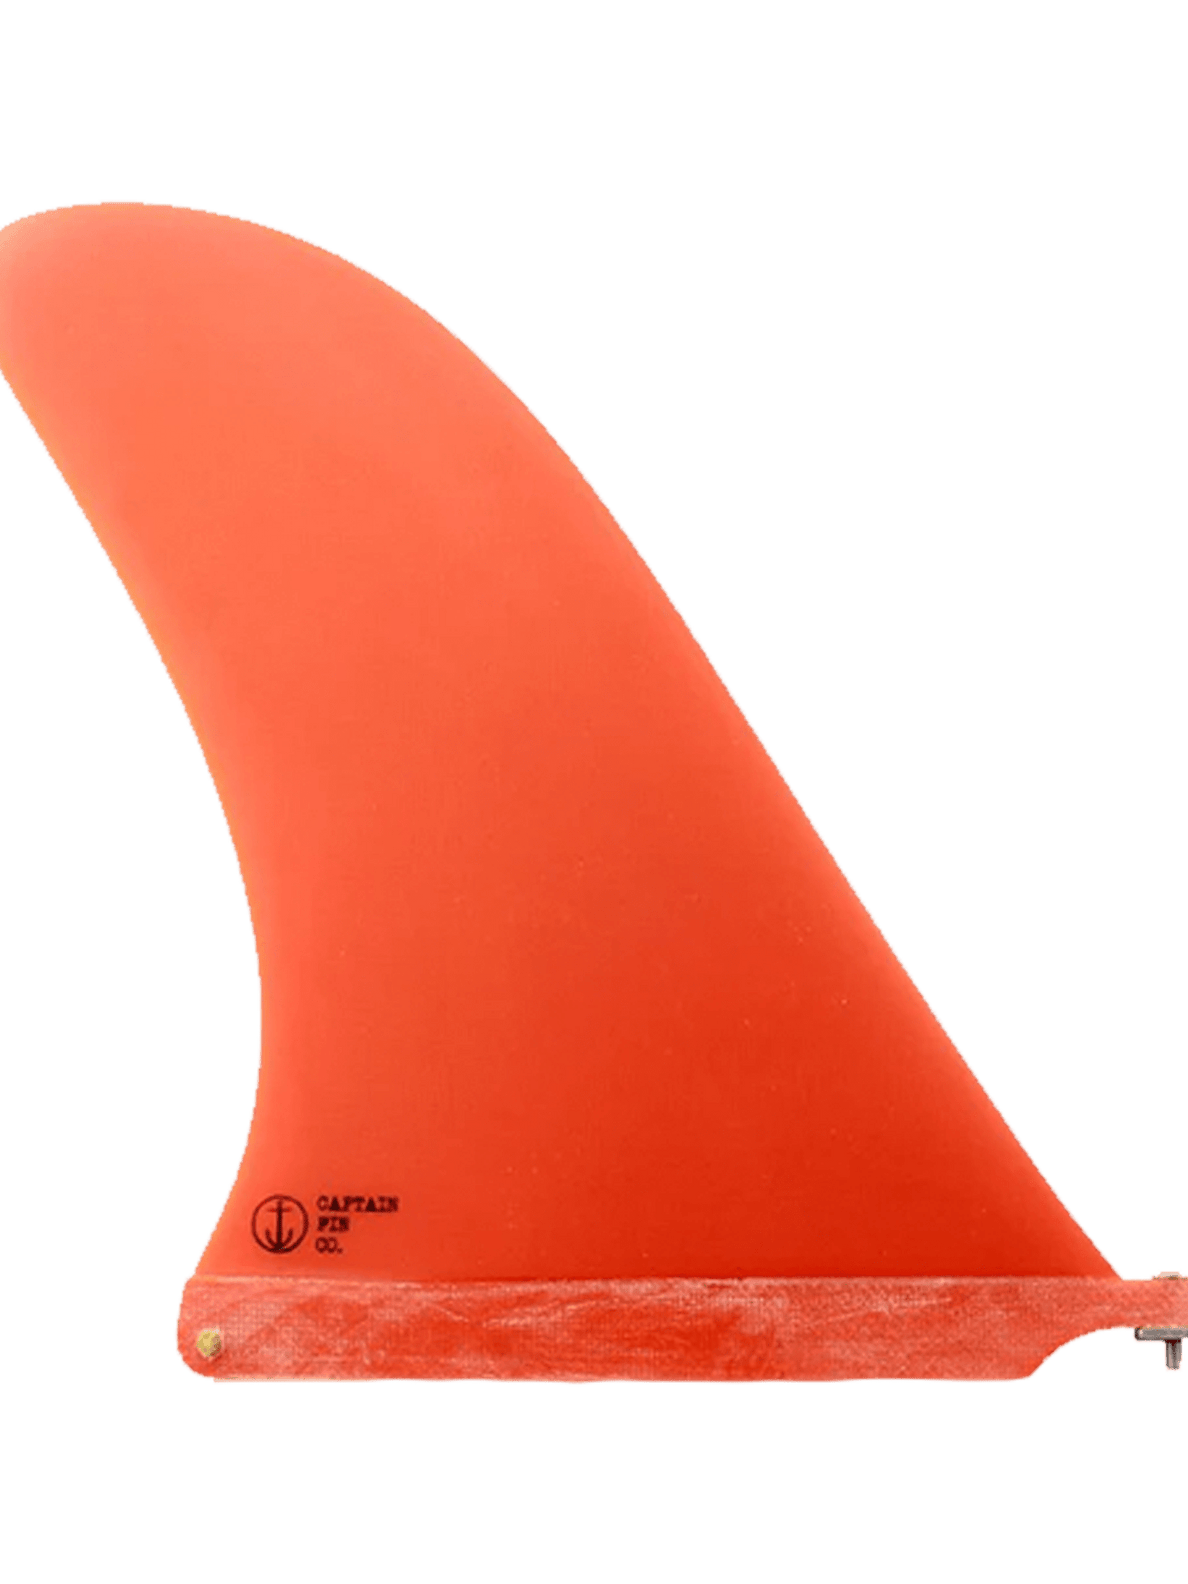 Cz Crash Helmet 10 - Orange